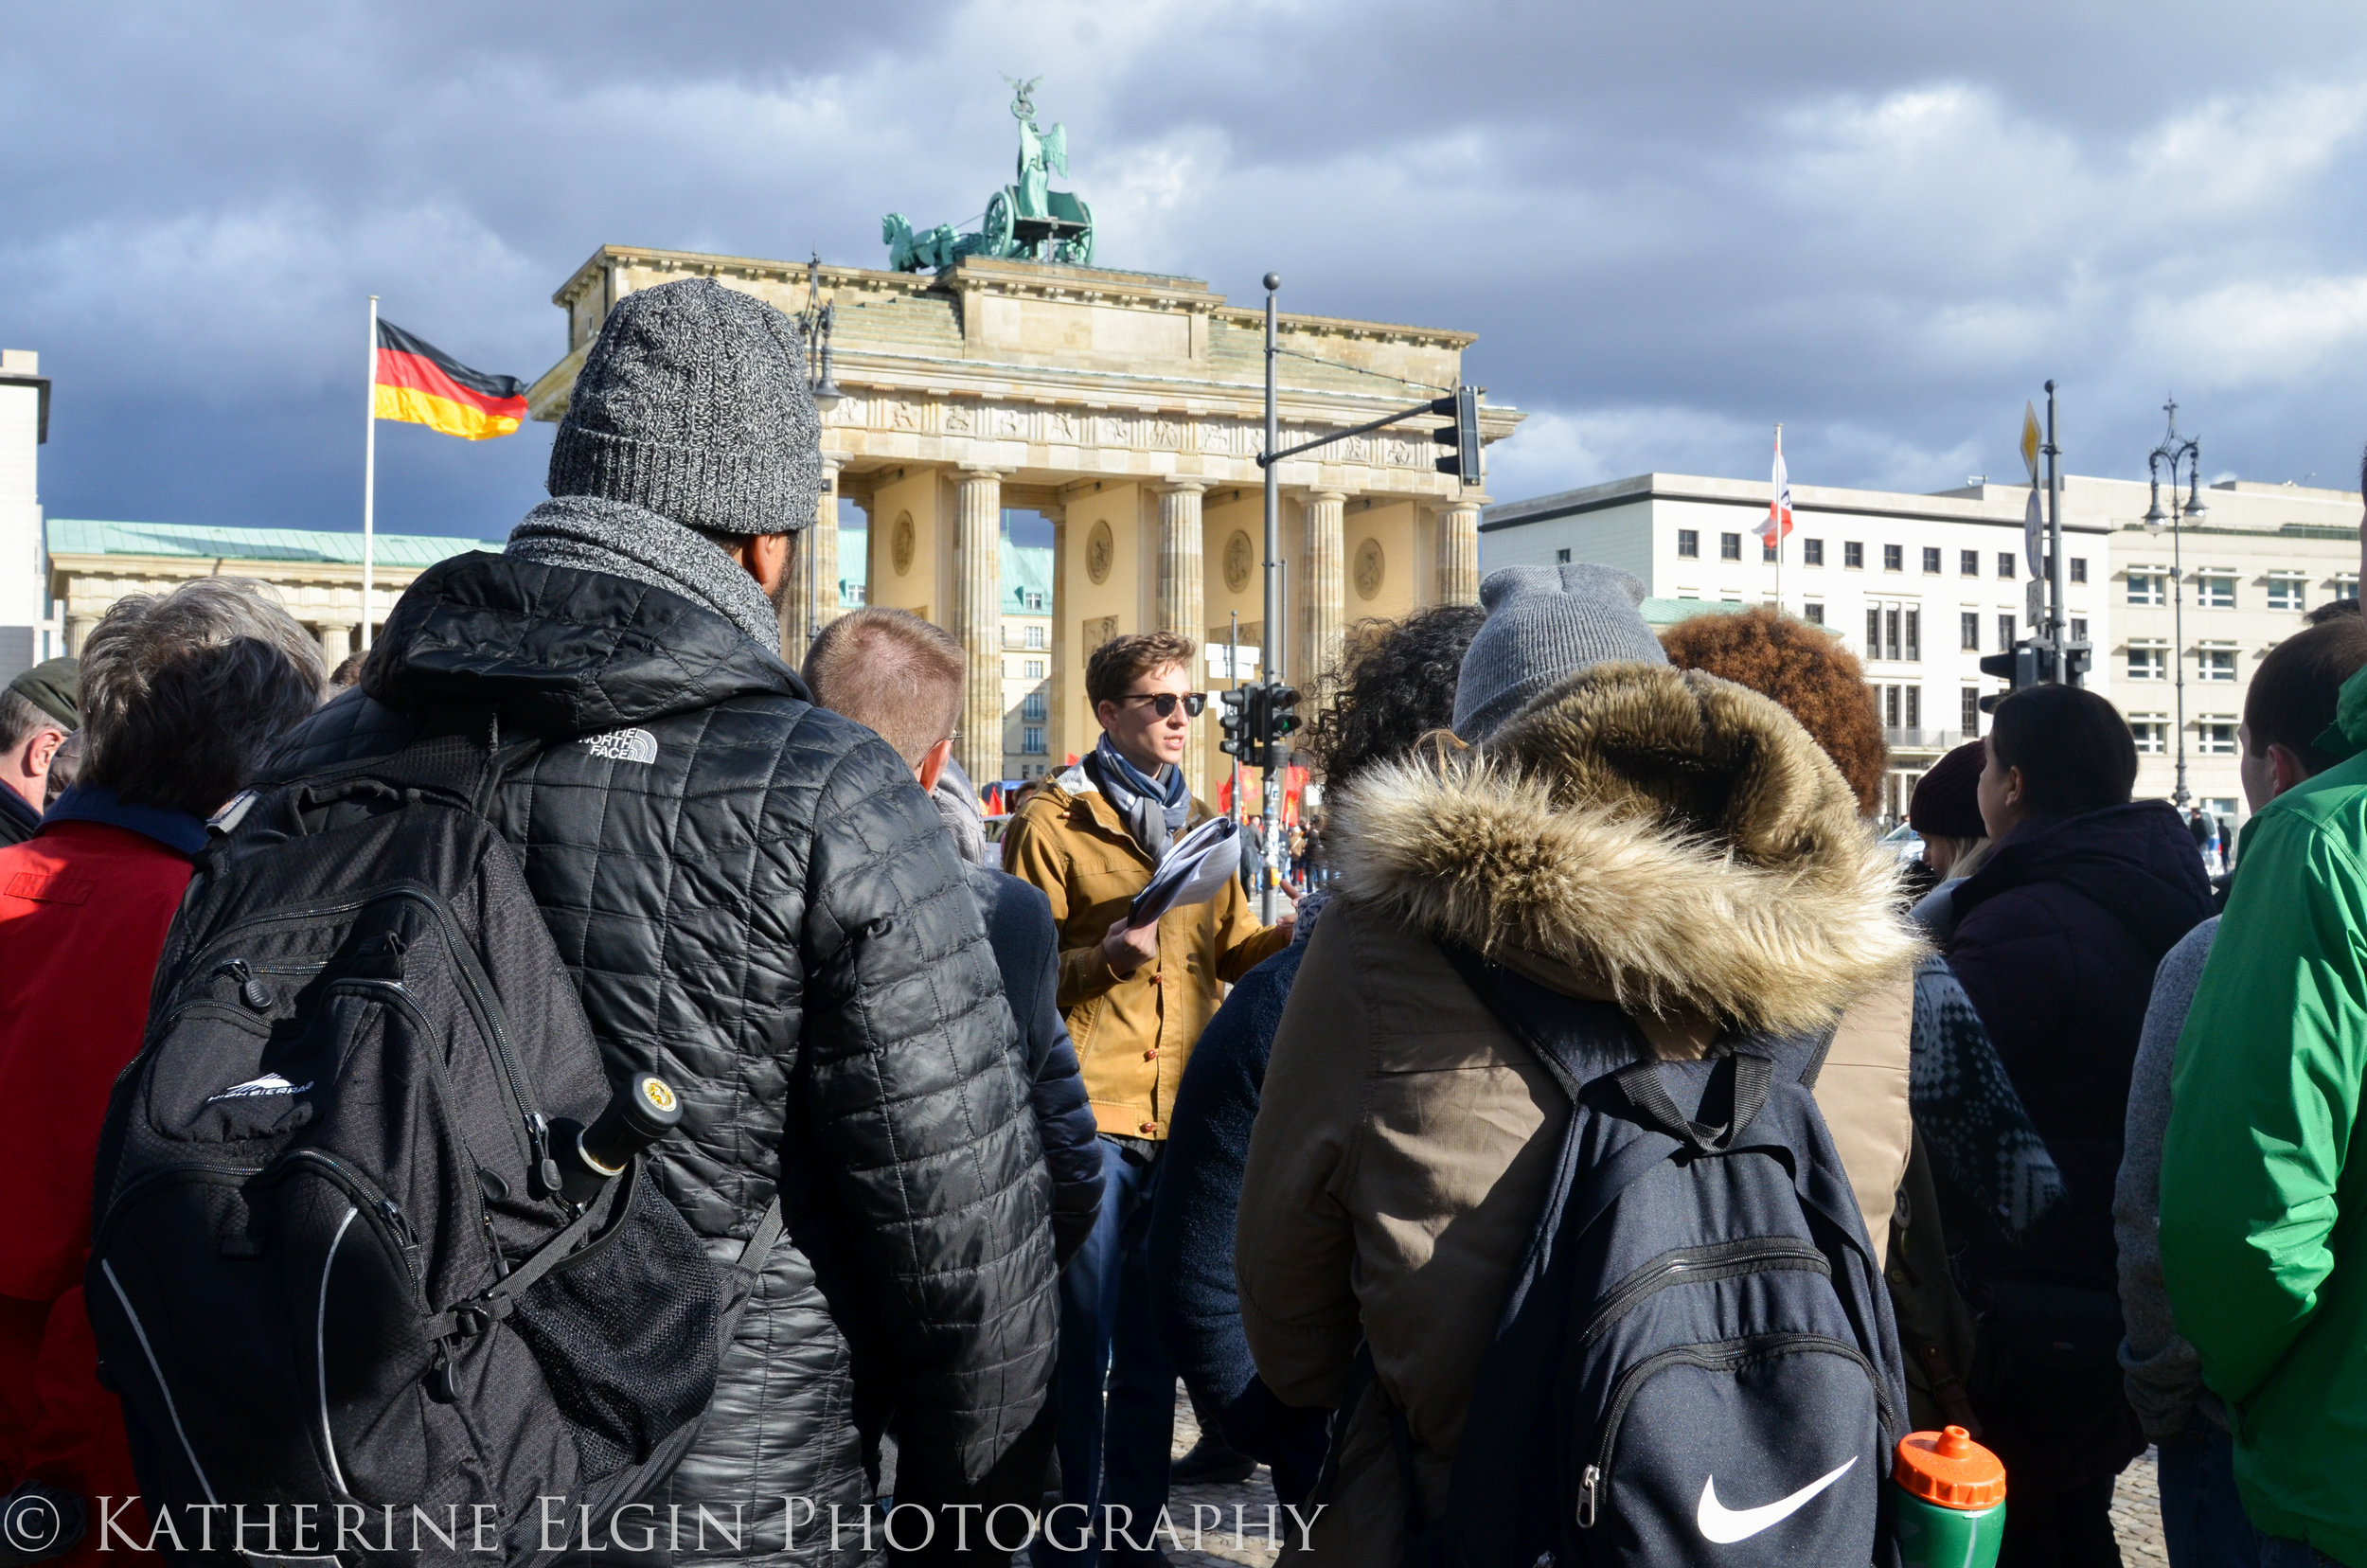 Brandenburg Gate. Berlin, Germany. March 2017.